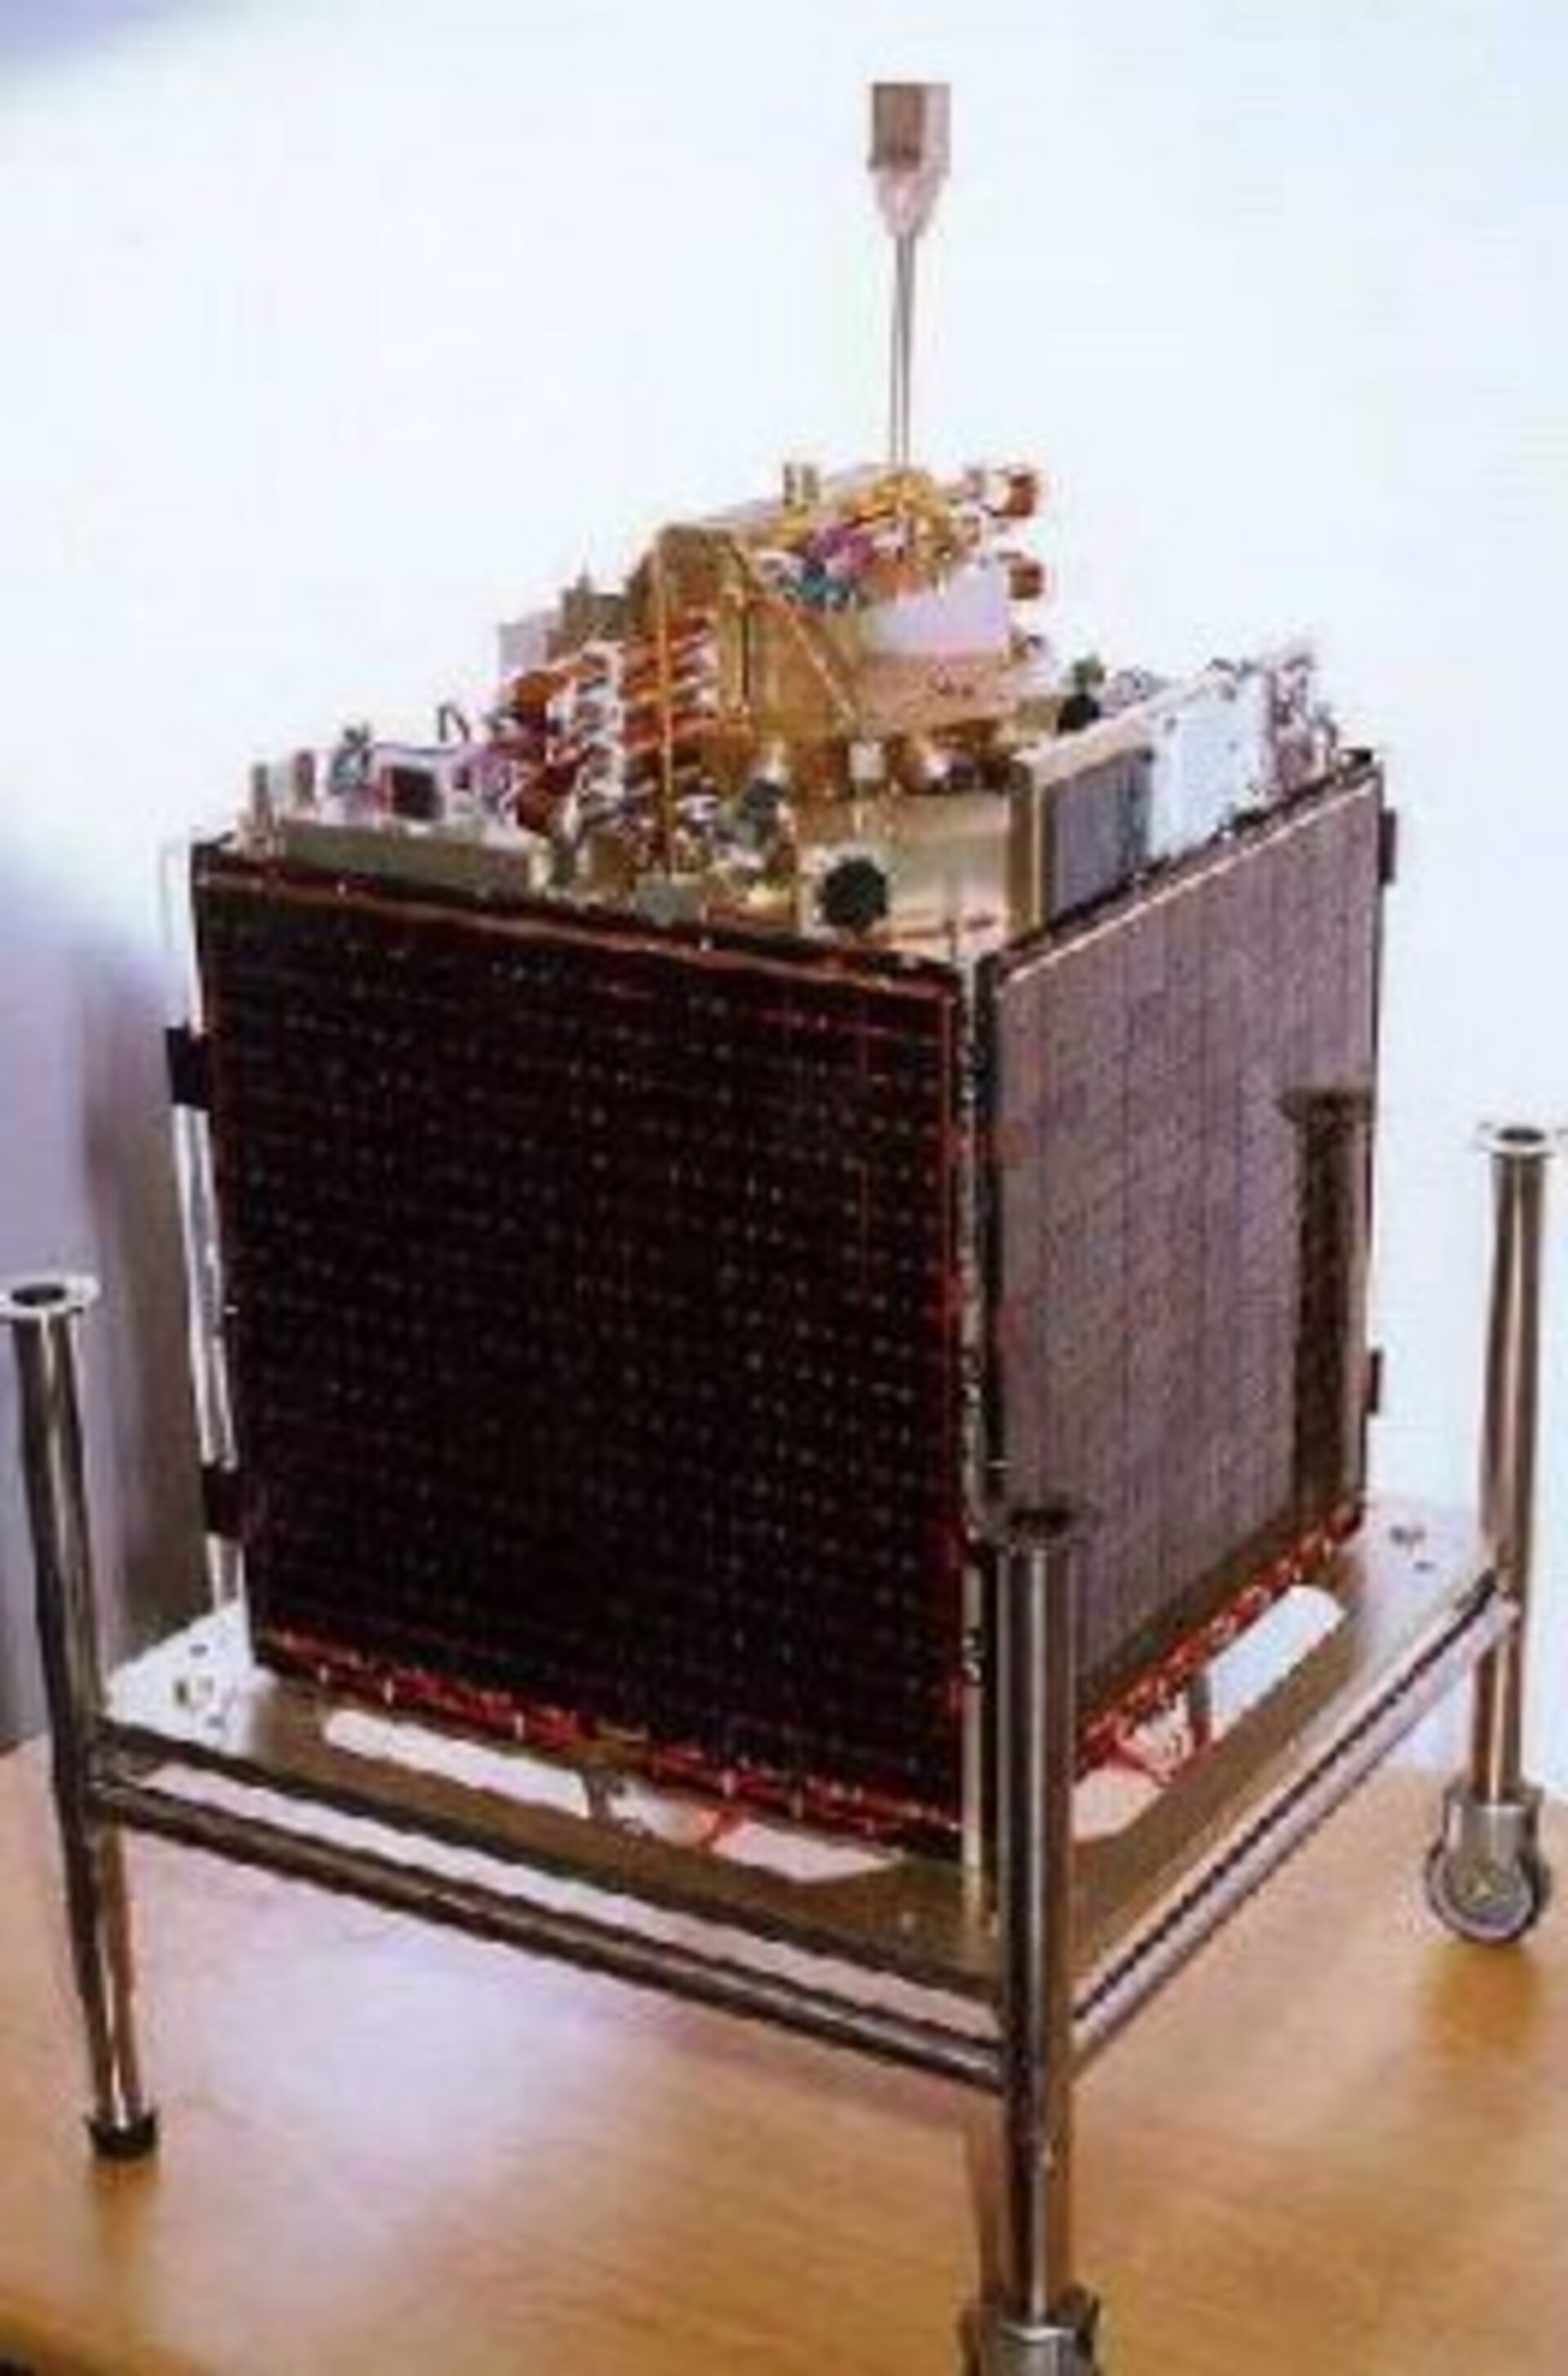 SUNSat-1, premier microsatellite sud-africain